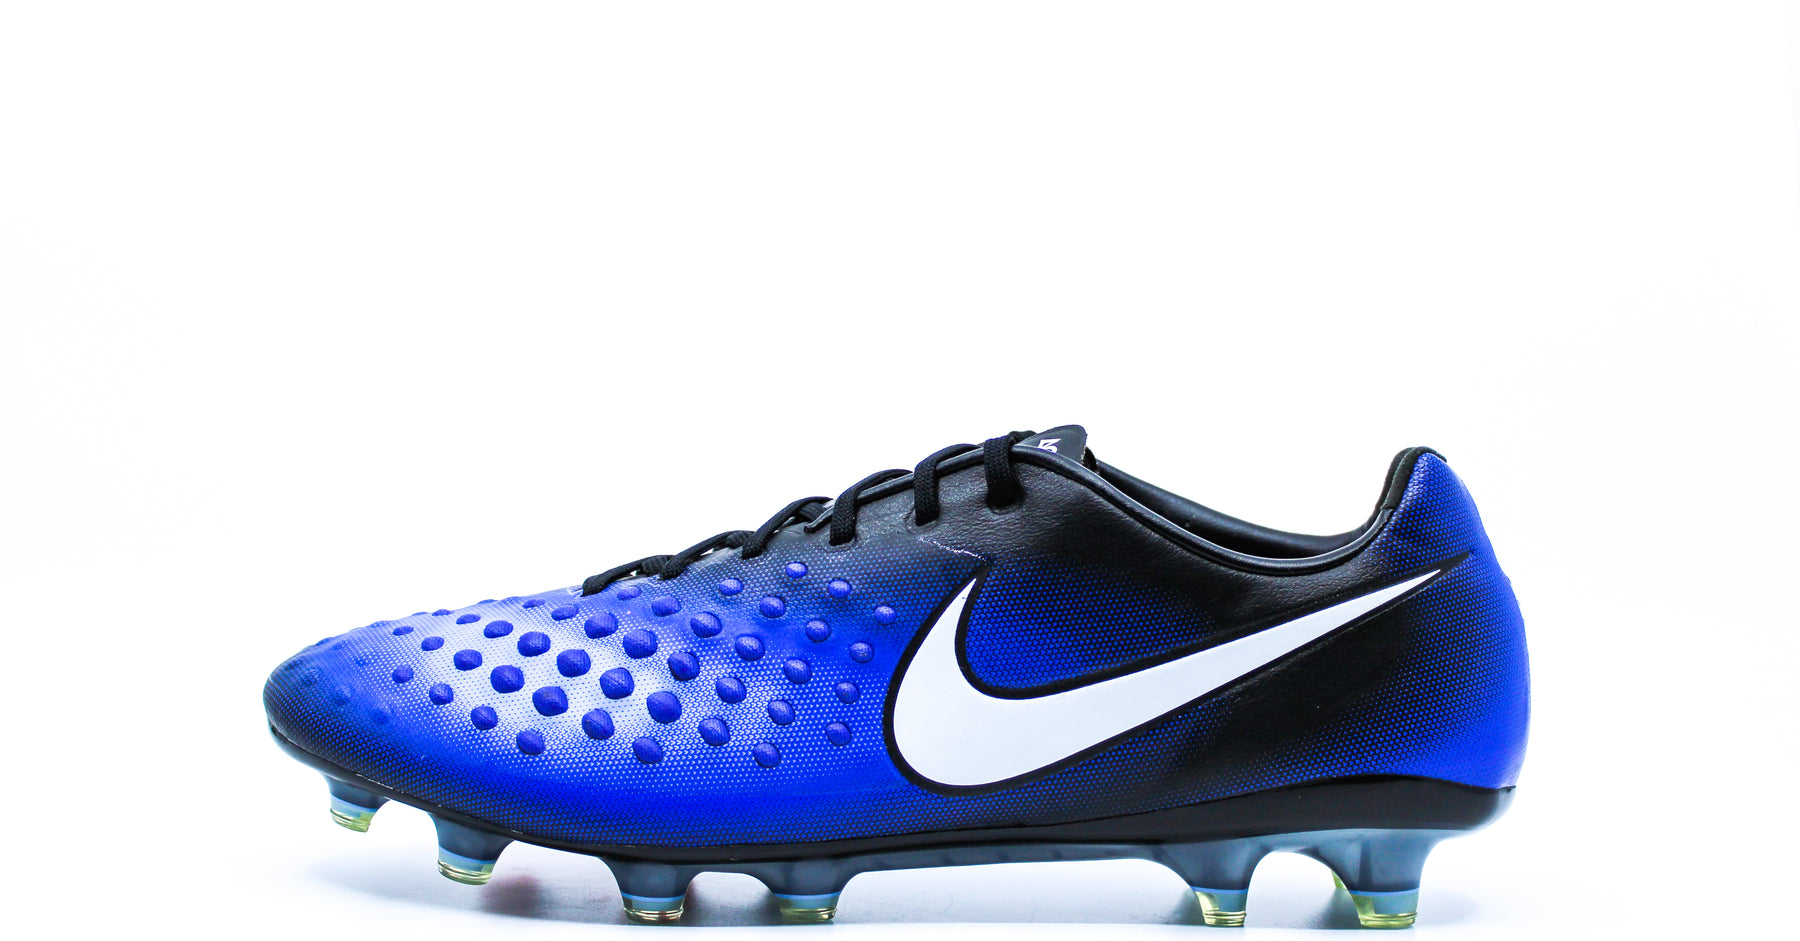 Nike Magista Opus FG Black/White/Paramount Blue (843813-018) – Retro Soccer Cleats